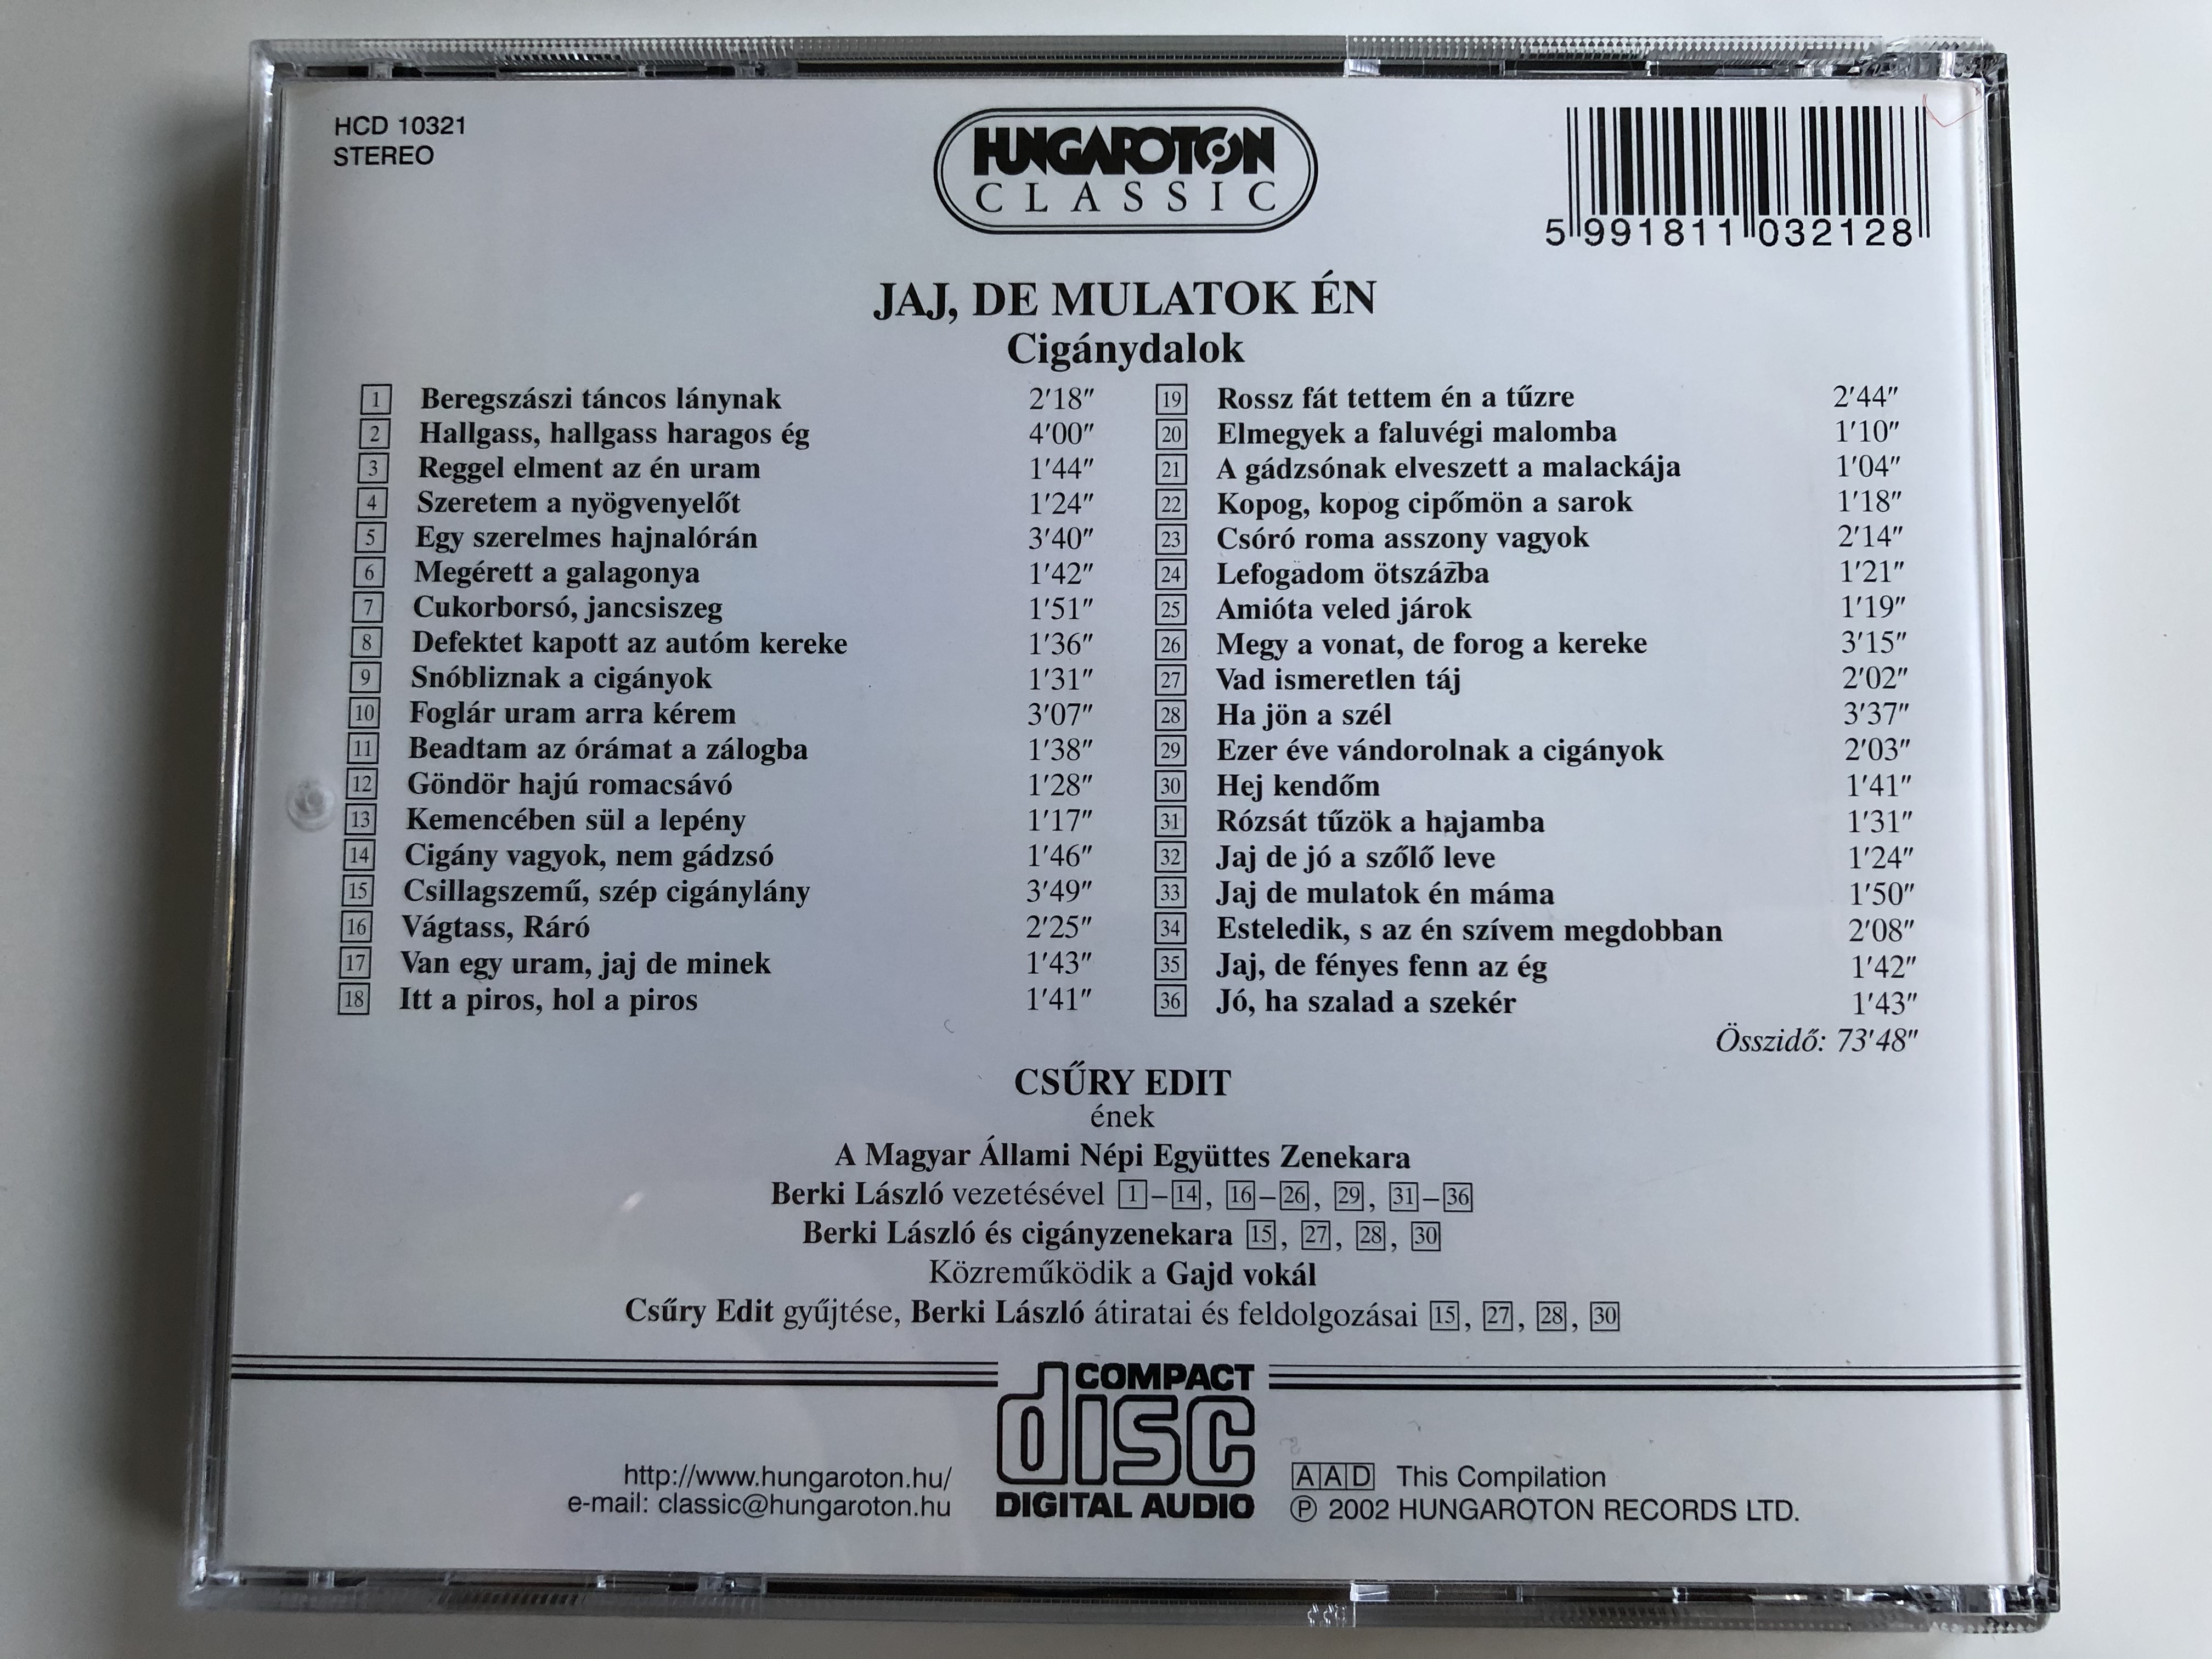 jaj-de-mulatok-n-cs-ry-edit-ciganydalok-hungaroton-classic-audio-cd-2002-stereo-hcd-10321-5-.jpg